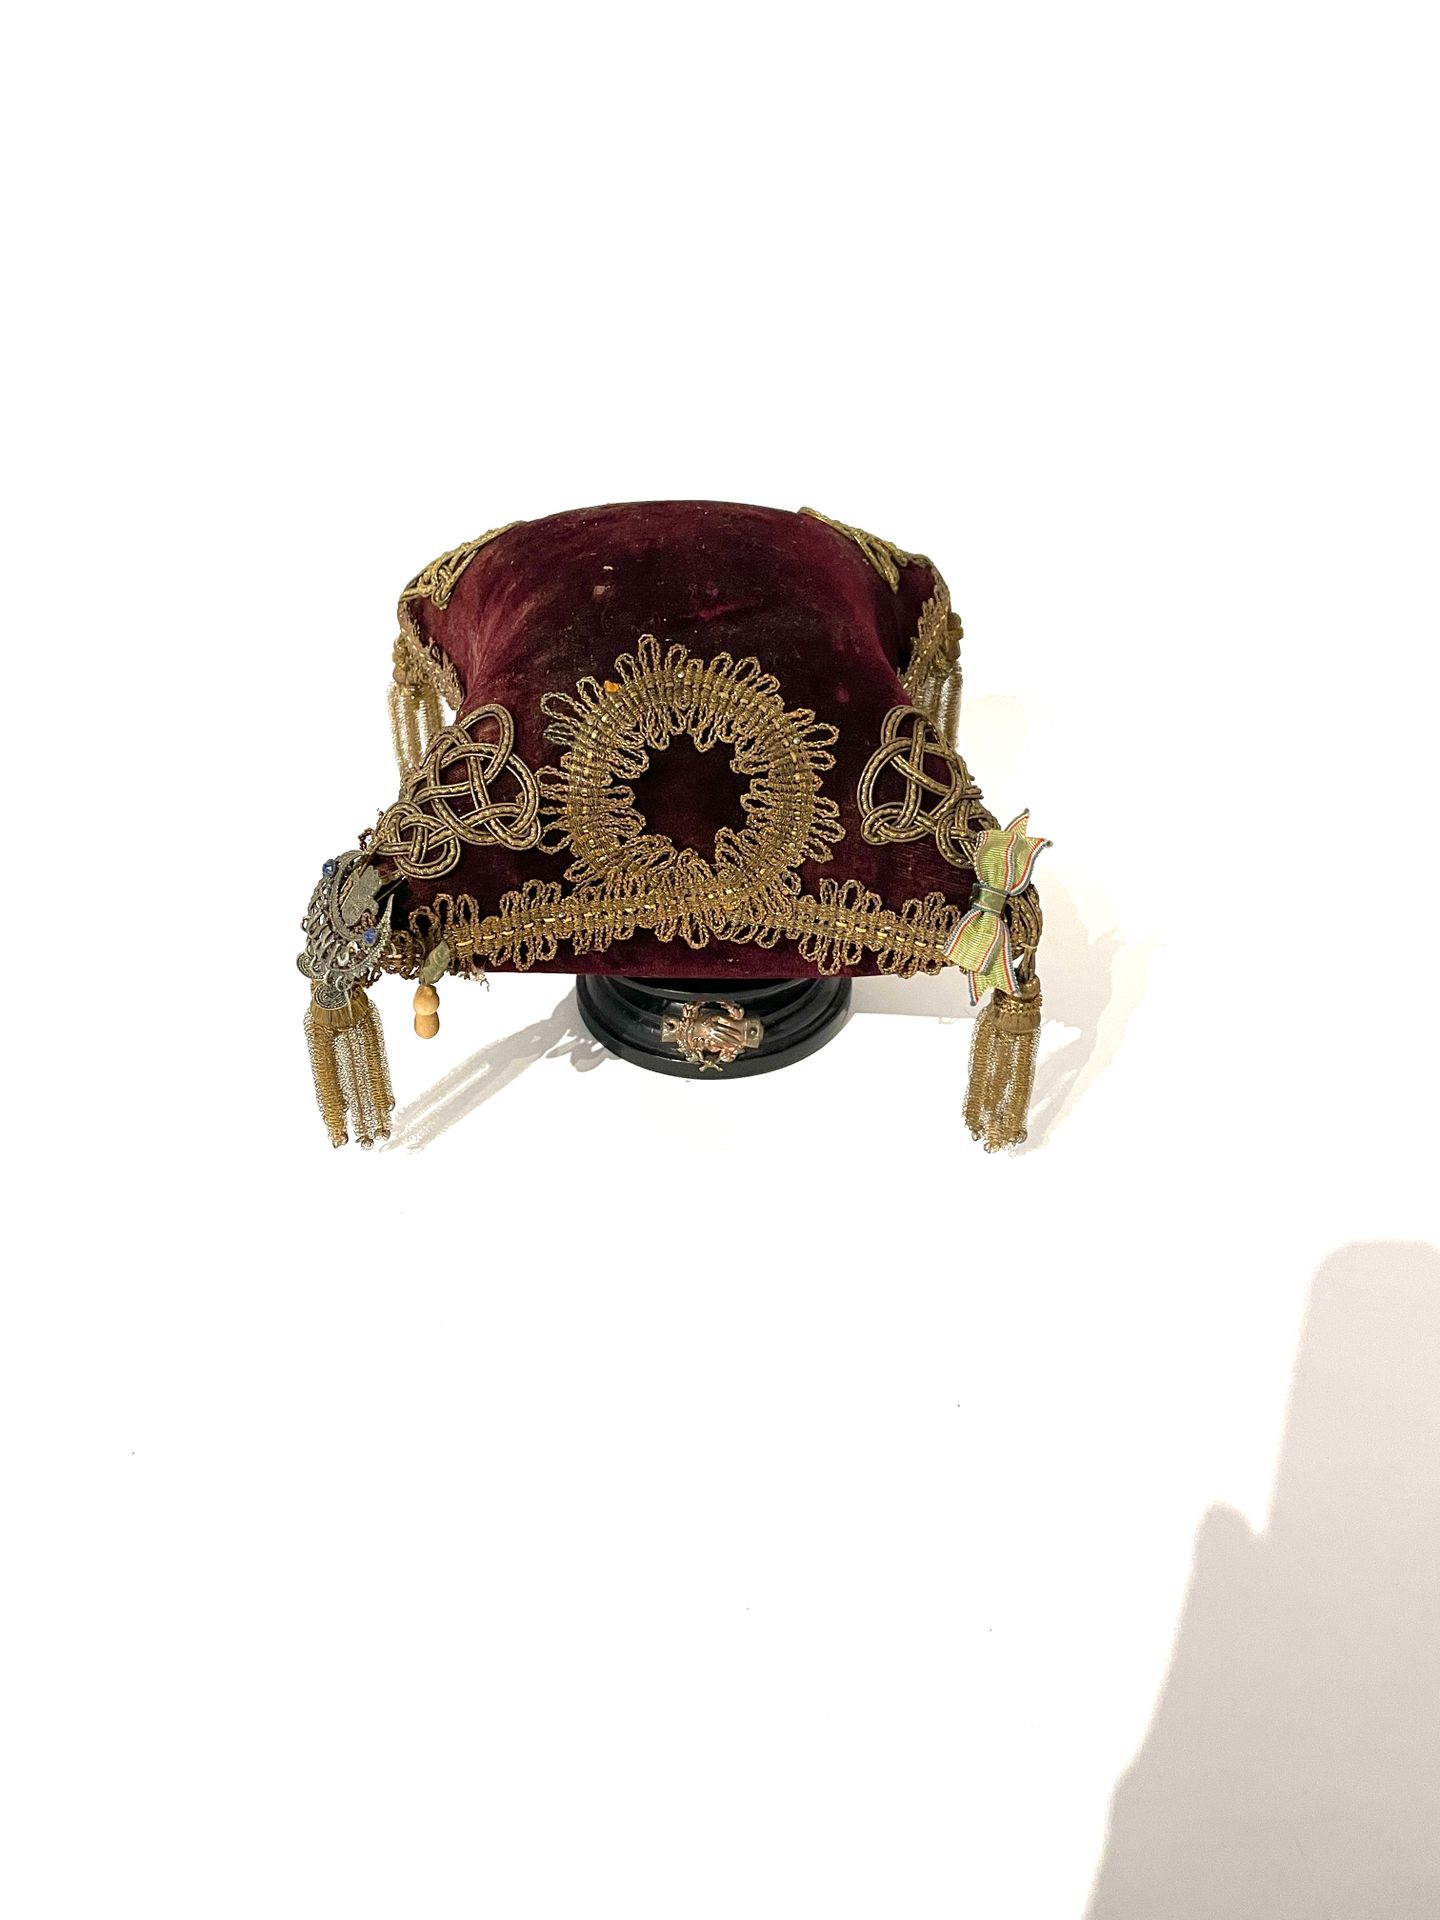 Null 婚礼坐垫 - 突尼斯

天鹅绒上的黄金和金属刺绣装饰

坐垫尺寸：21 x 21 cm